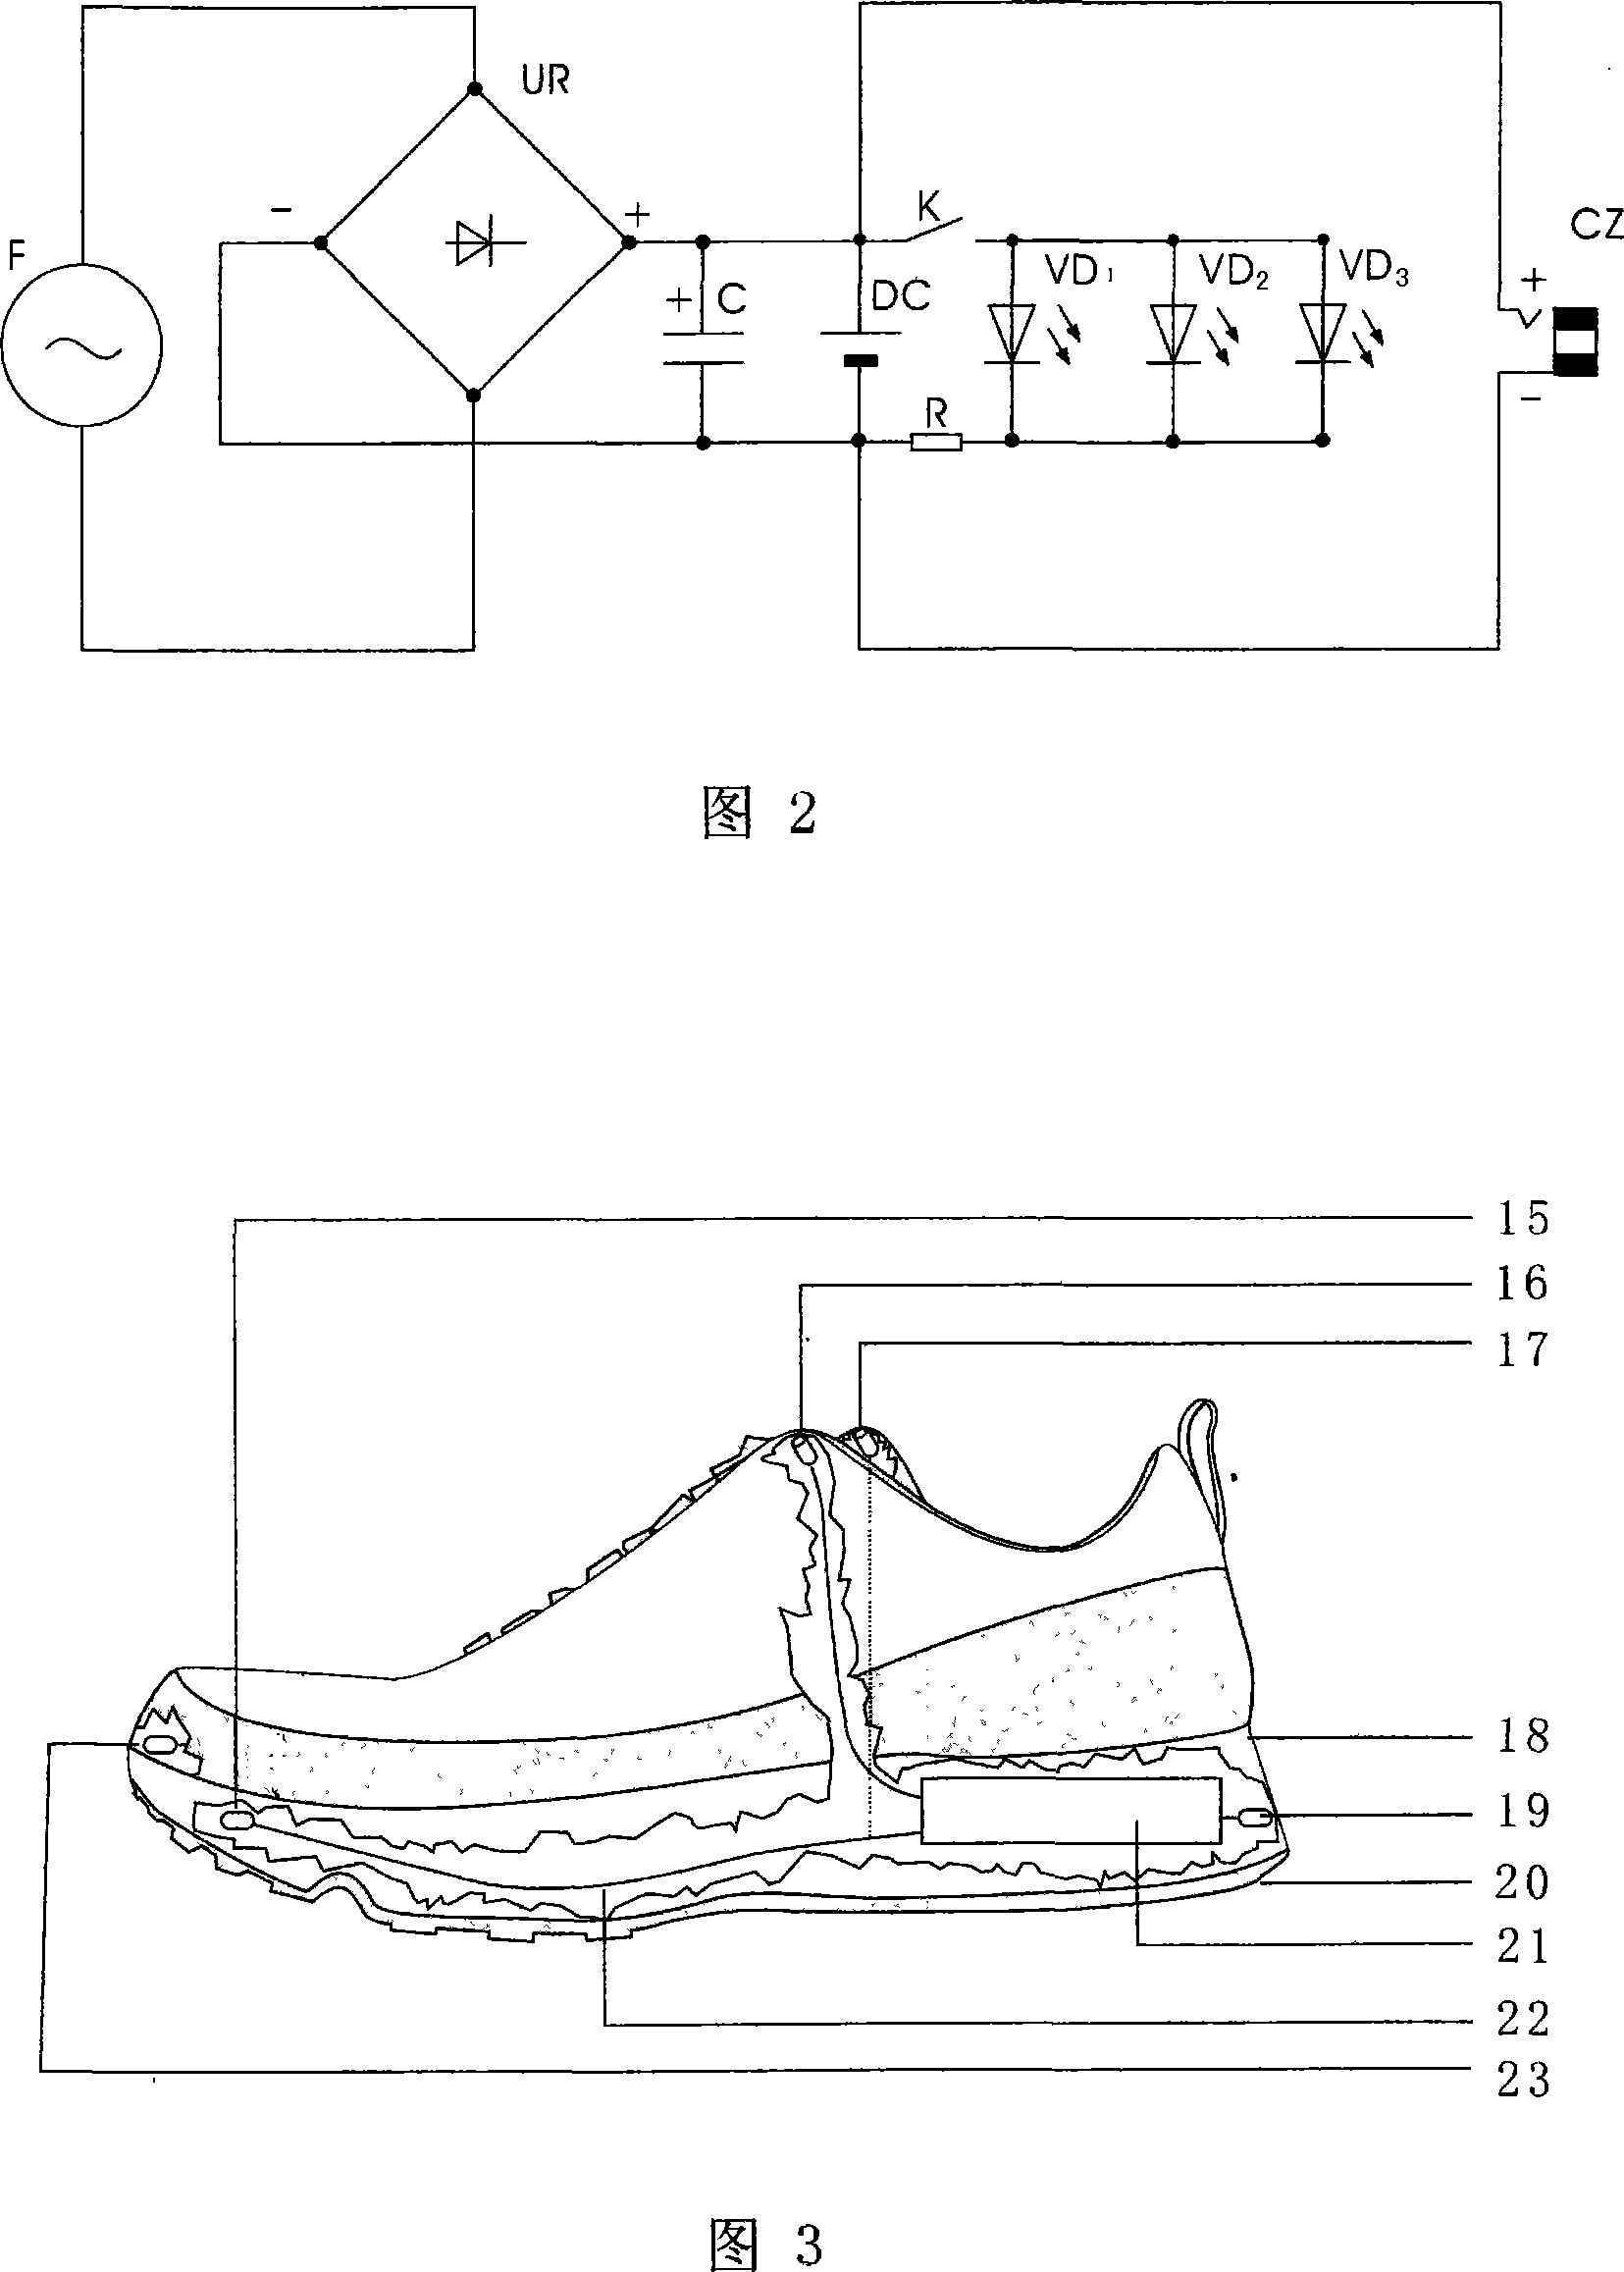 Pressure electricity generating shoe